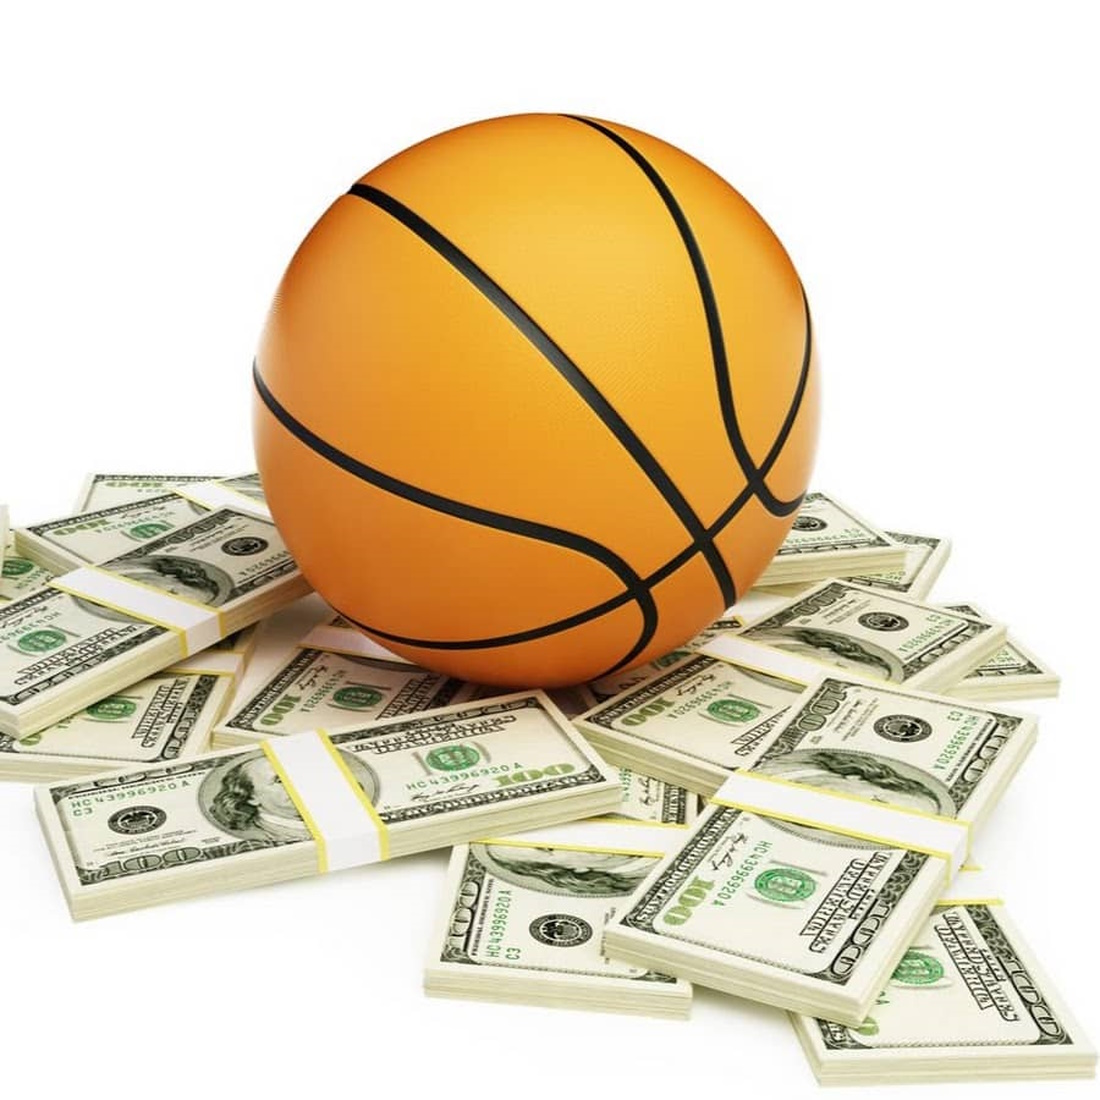 Спортивные рубли. Ставки на баскетбол. Спорт и деньги. Деньги ставки. Мяч с деньгами.